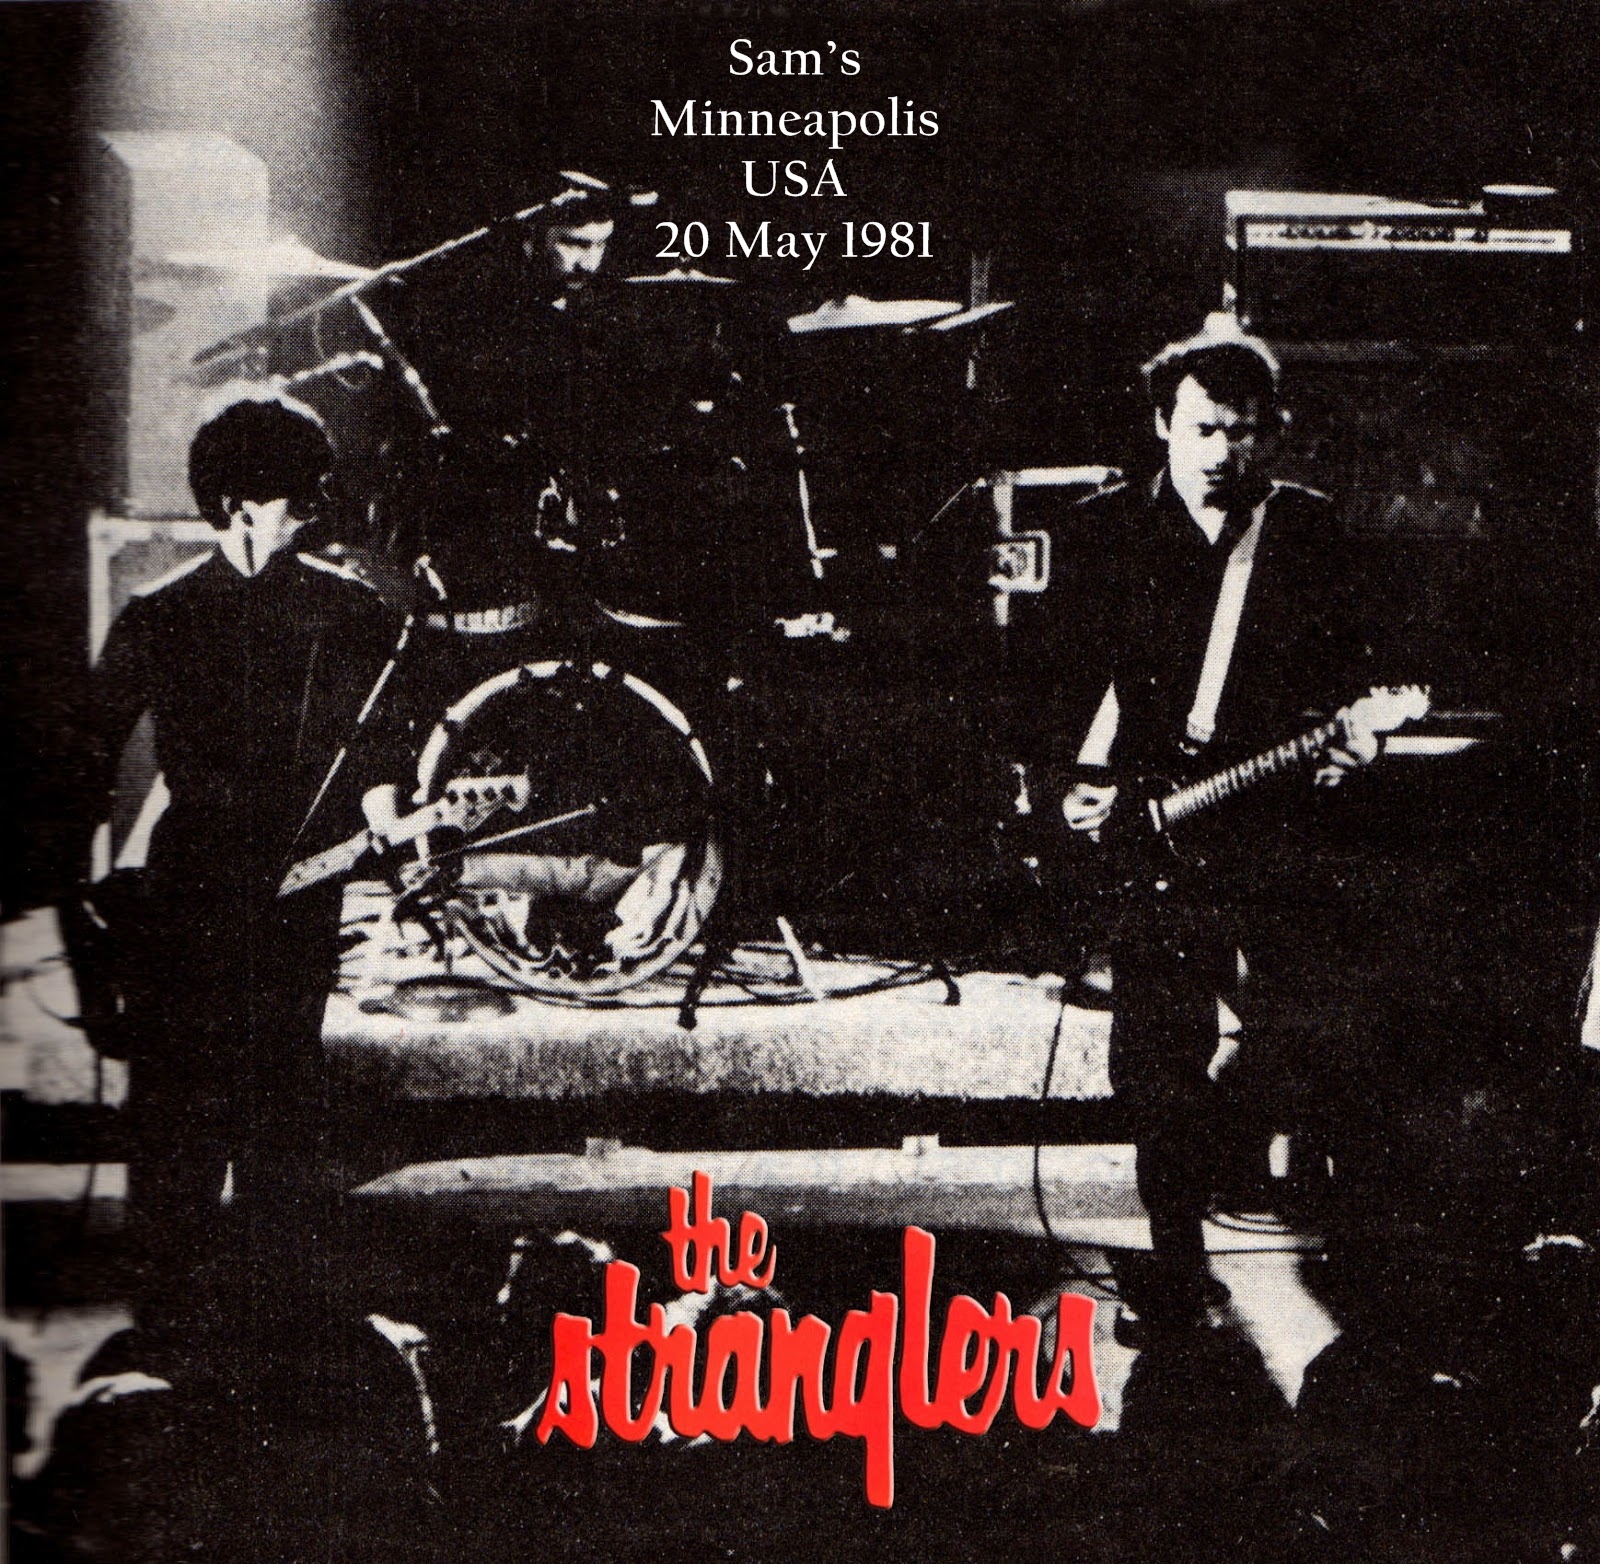 stranglers tour 1981